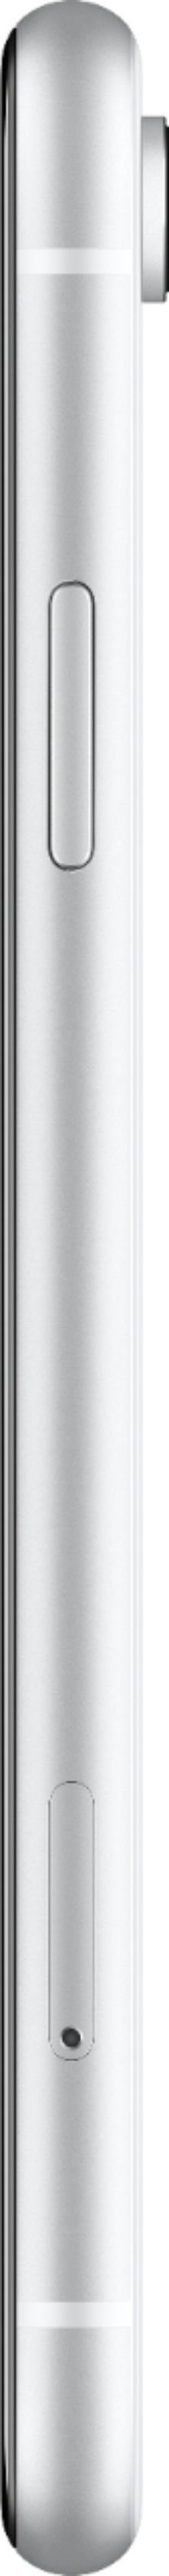 Best Buy: Apple iPhone XR 64GB White (Verizon) MRYT2LL/A